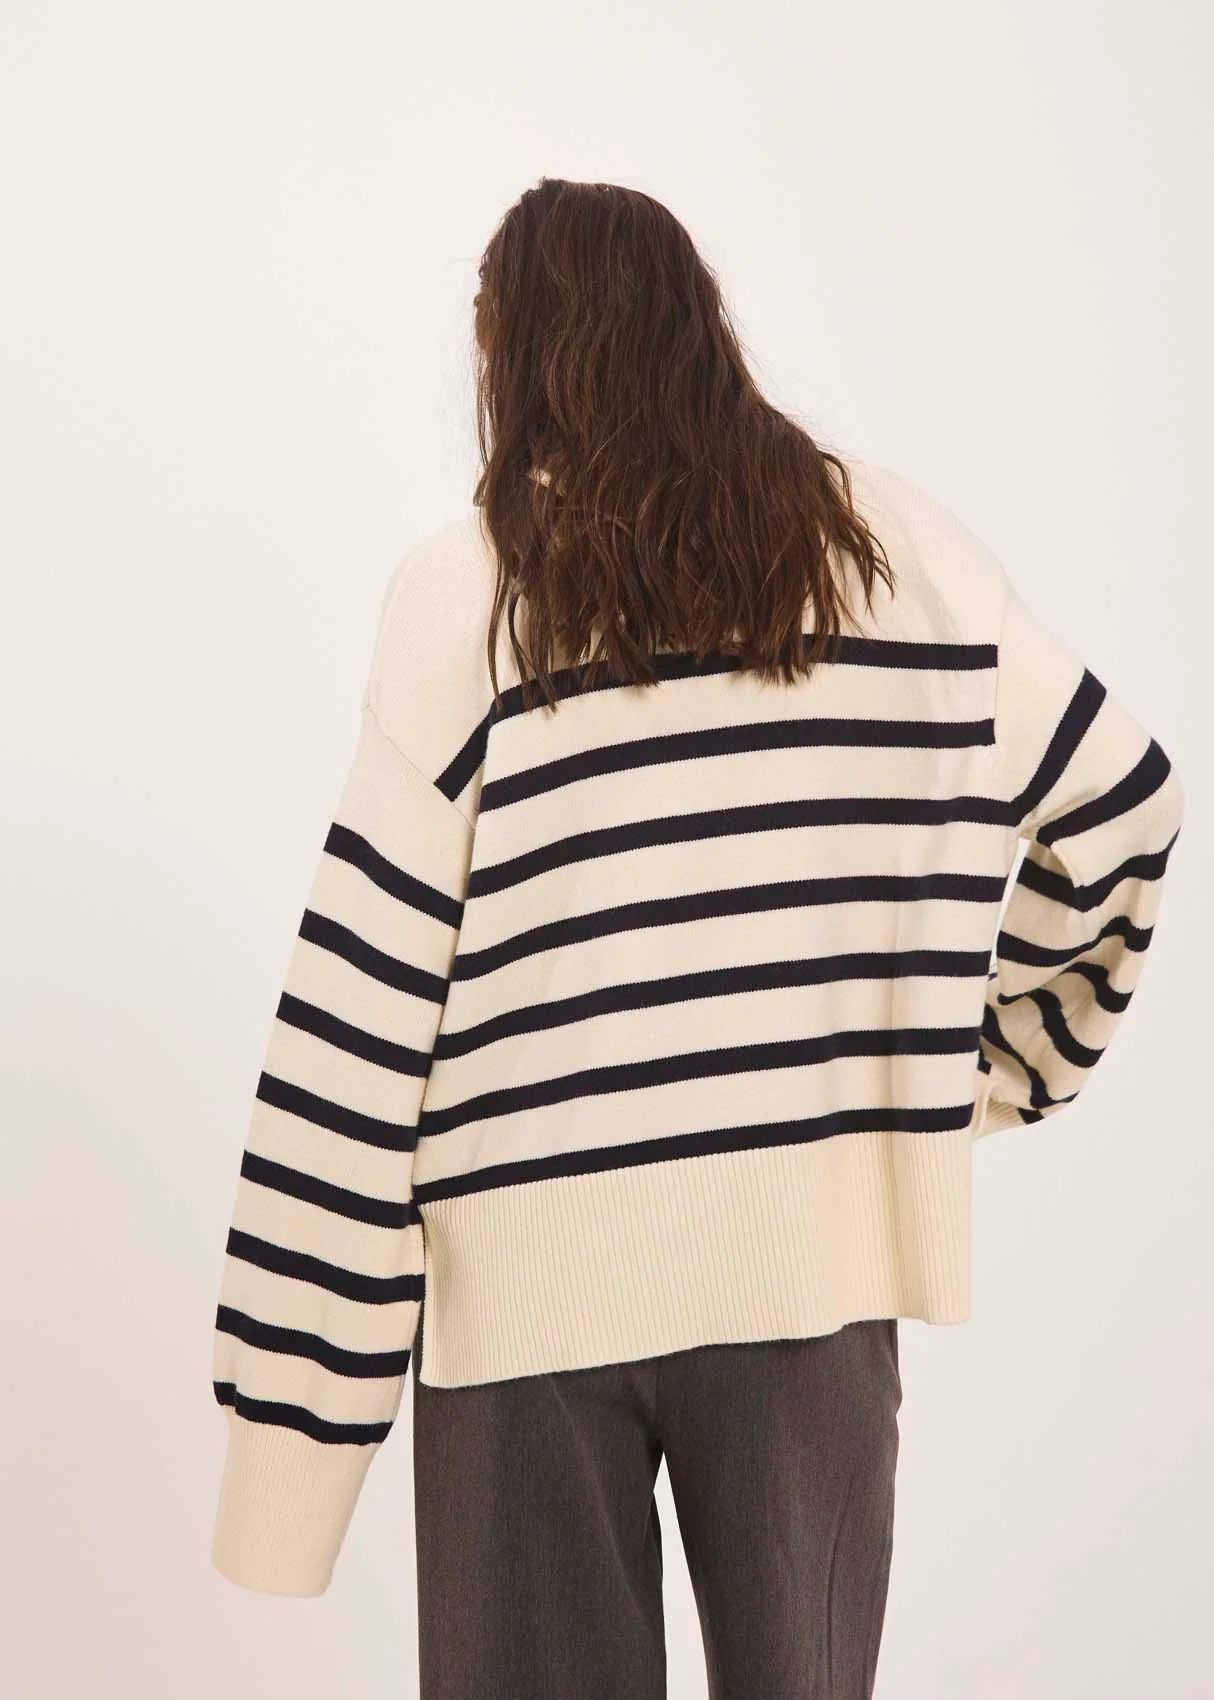 Norr  Lindsay new knit stripe top / women